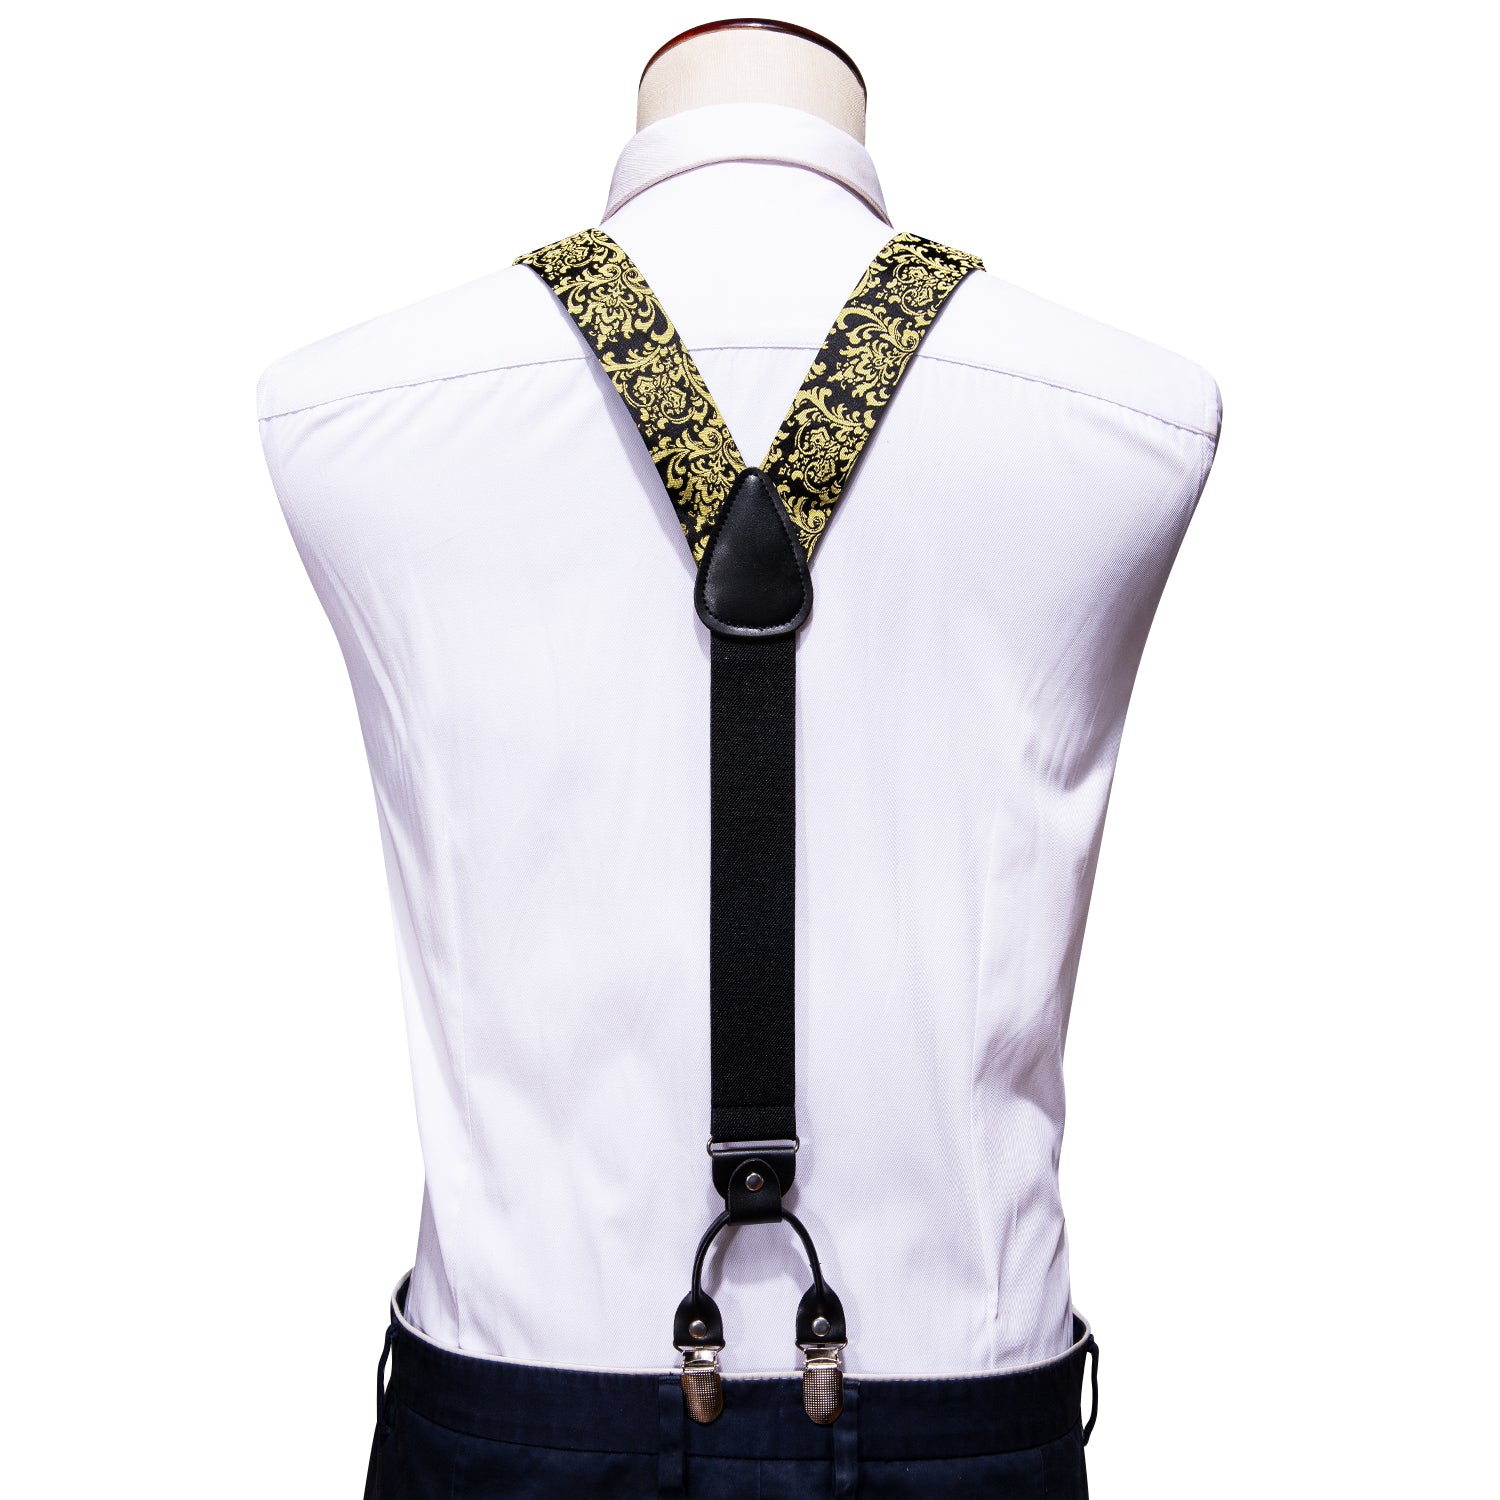 Barry.wang Black Tie Golden Floral Y Back Adjustable Bow Tie Suspenders Set